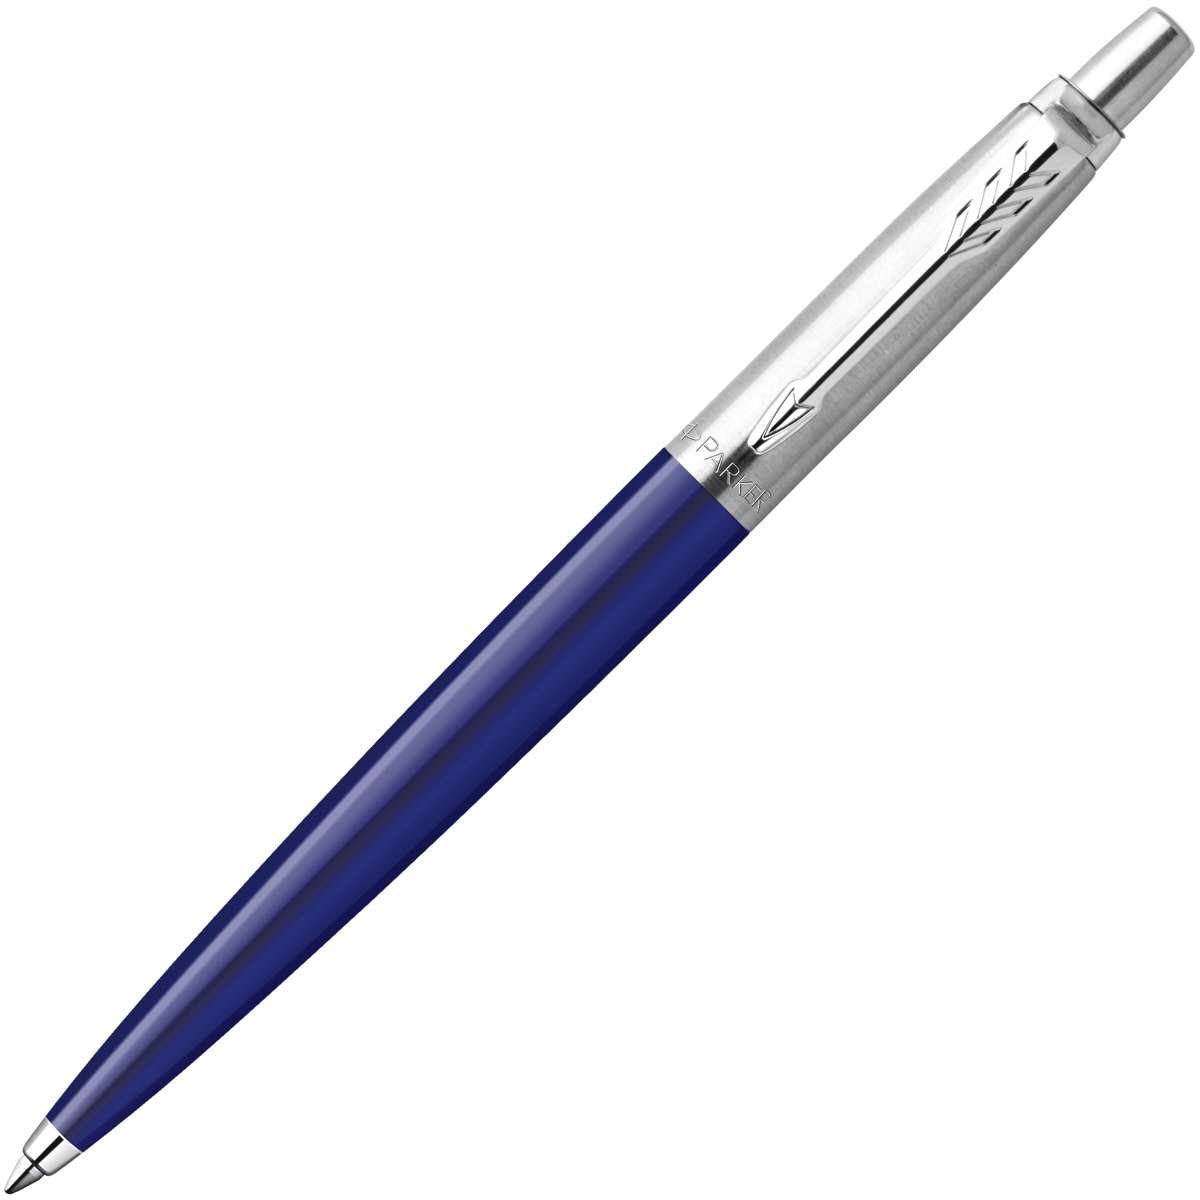  Шариковая ручка Parker Jotter K60 Originals Color Plastic 2019, Blue СT, фото 2